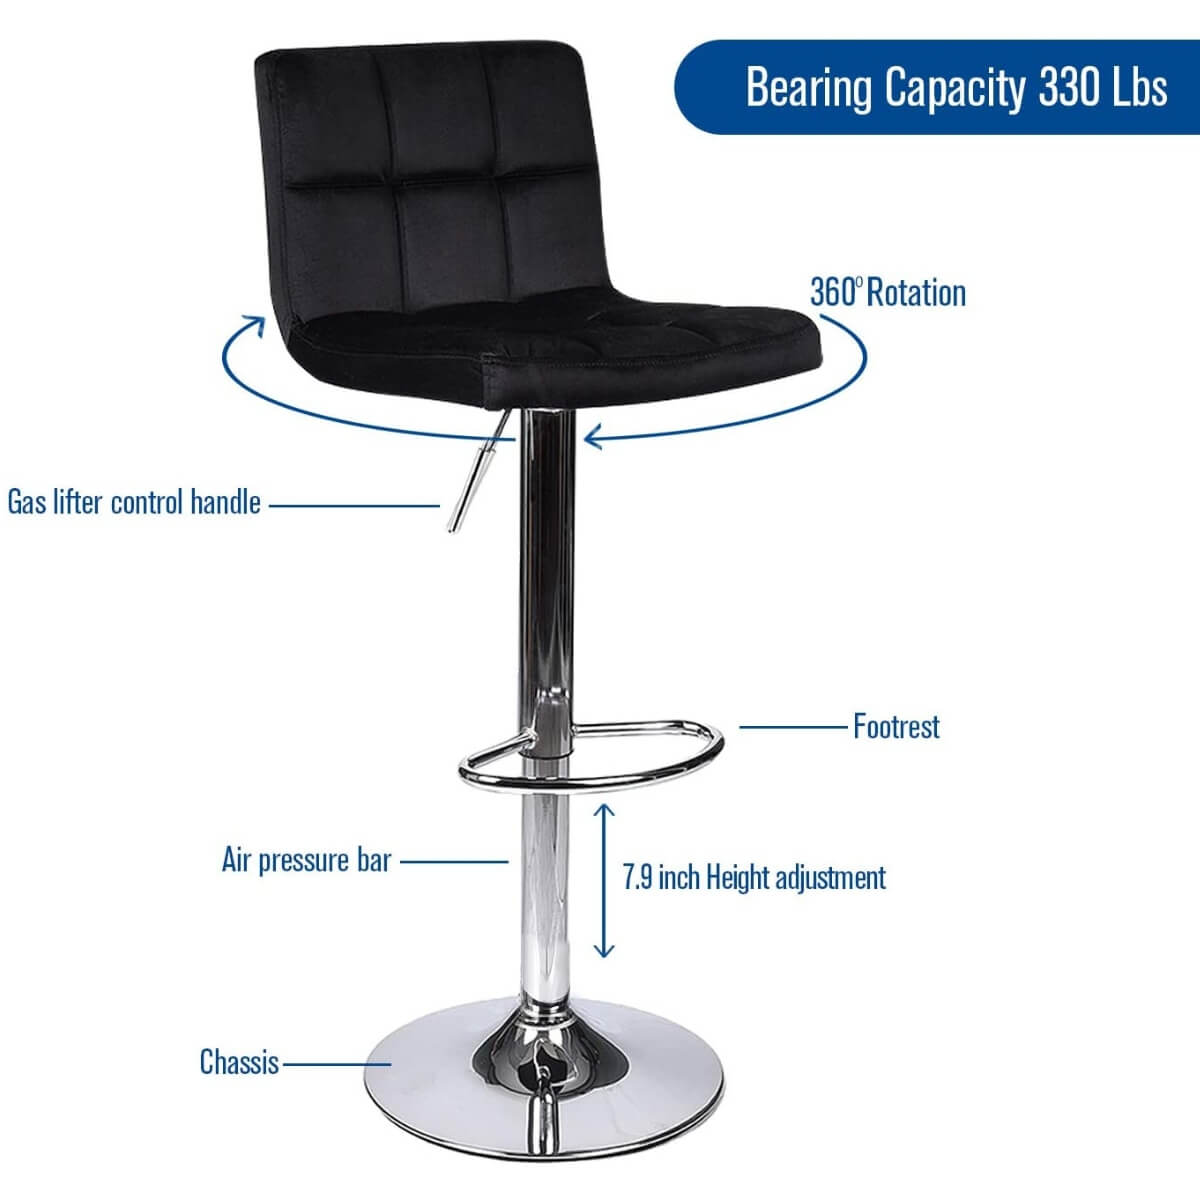 Black velvet fabric armless bar stools descriptions